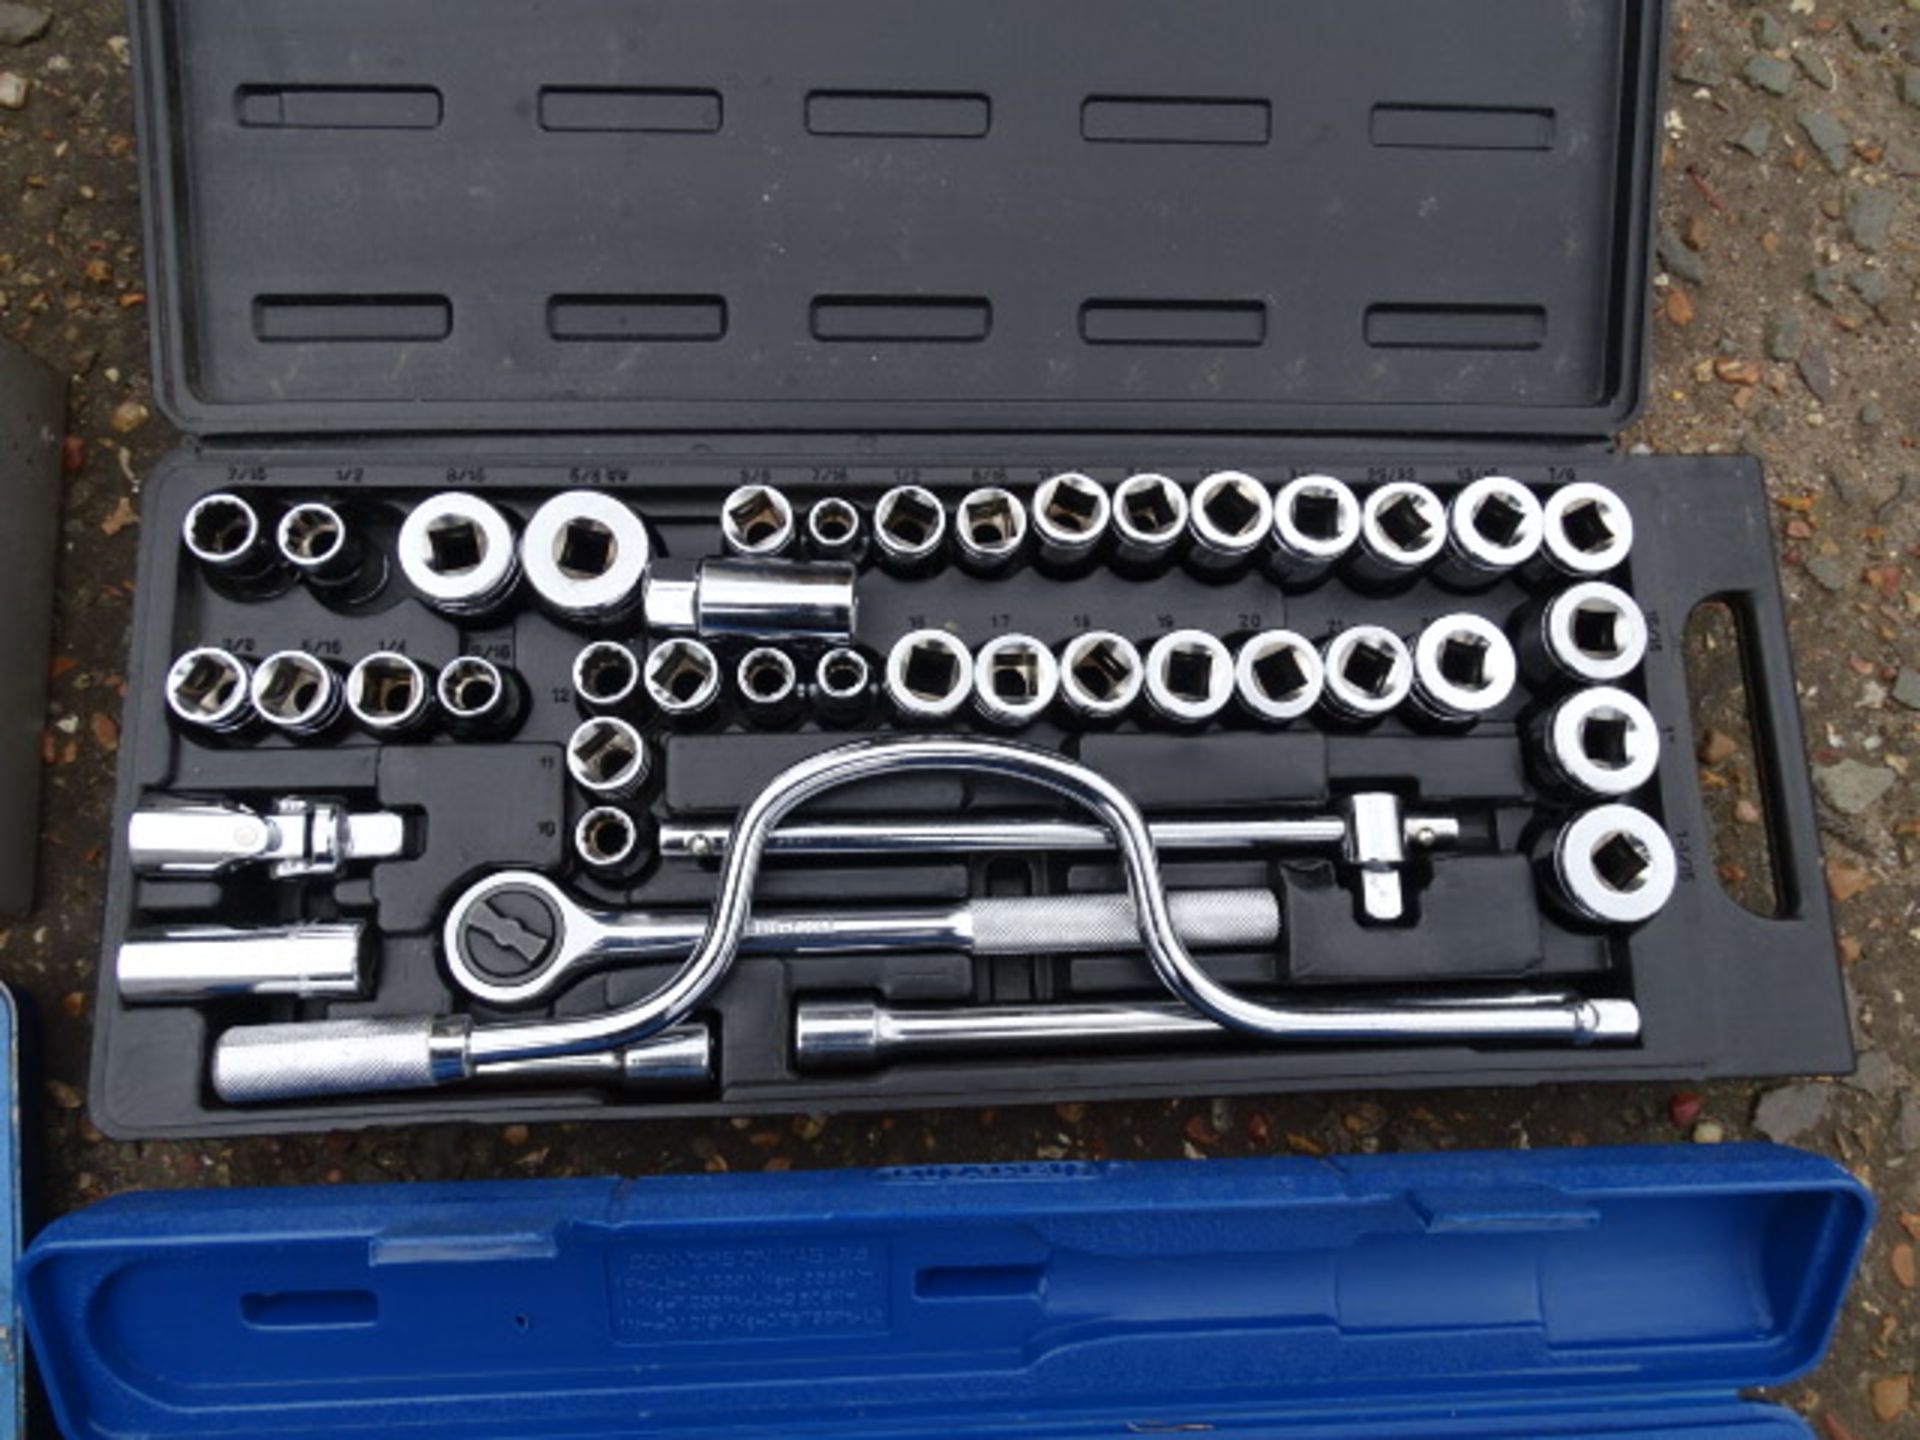 Kamasa Tools socket set and Draper torque wrench etc - Image 4 of 11